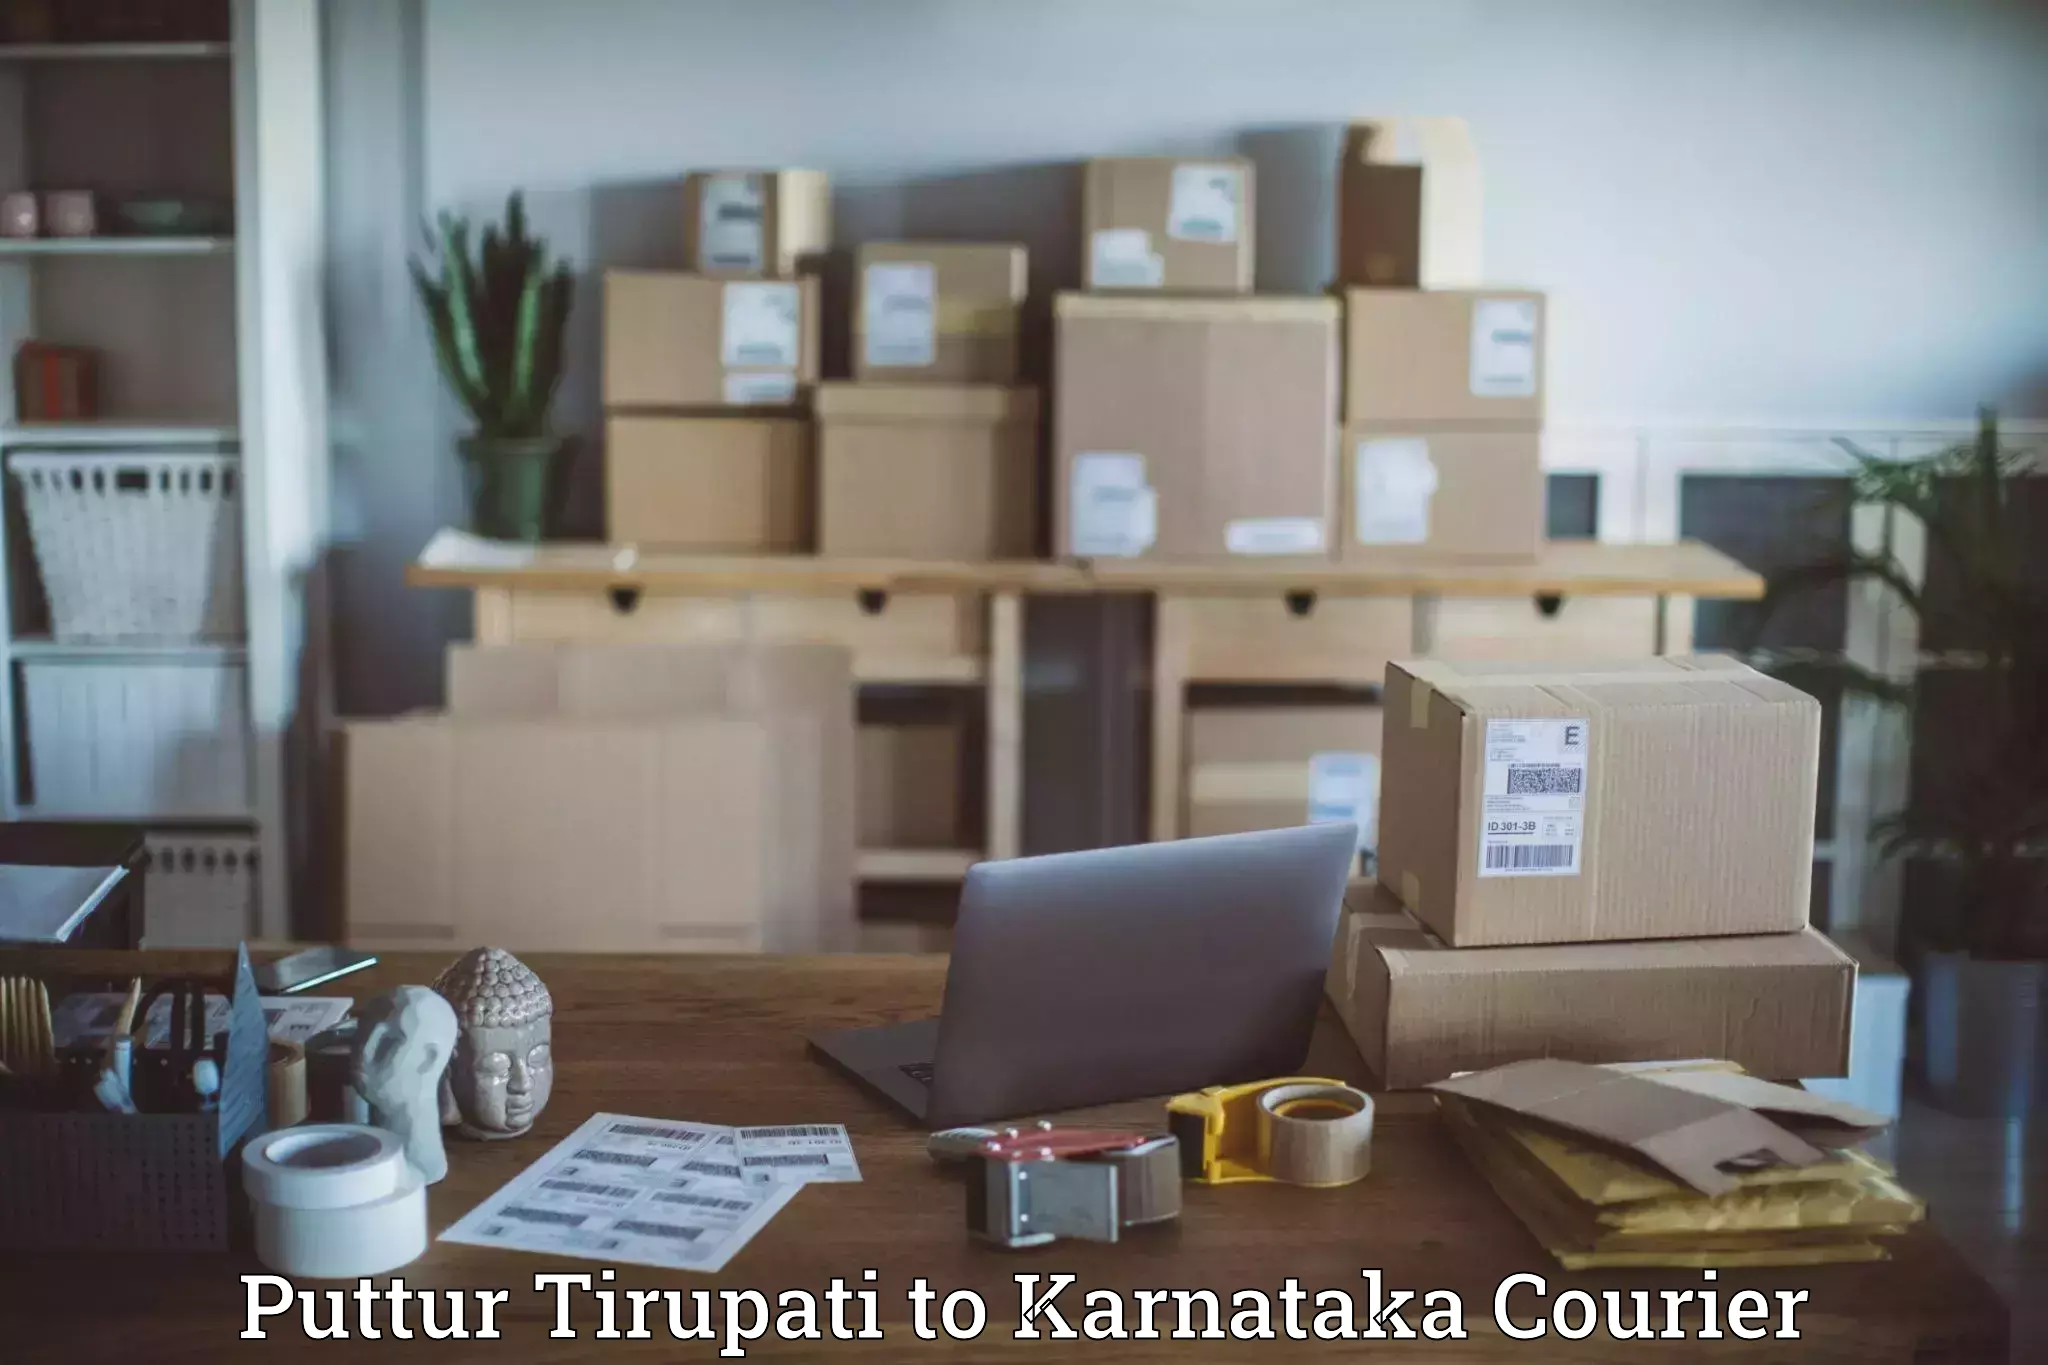 Budget-friendly shipping Puttur Tirupati to Bangalore